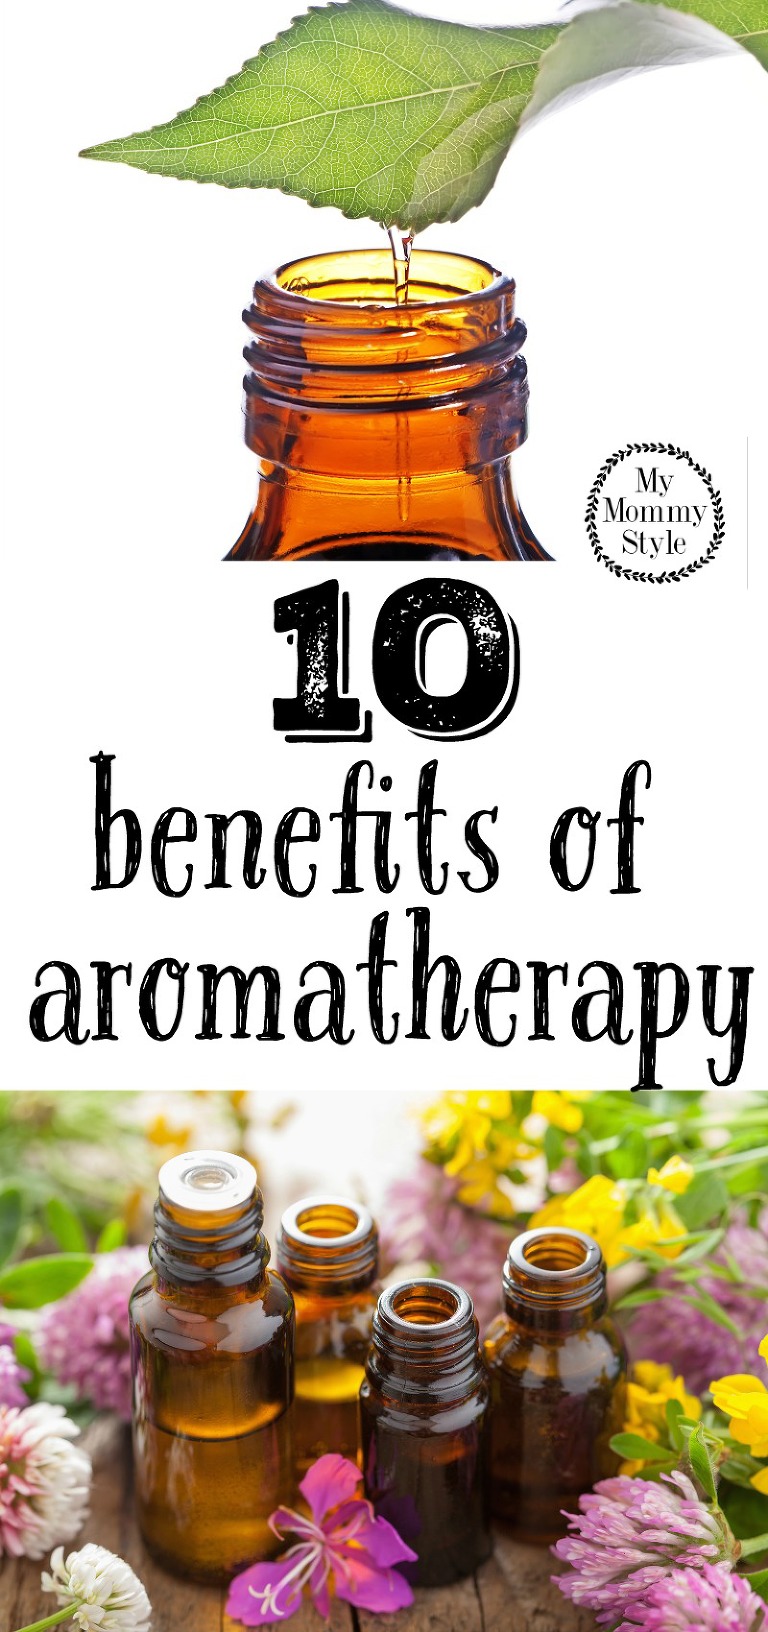 10 benefits of aromatherapy